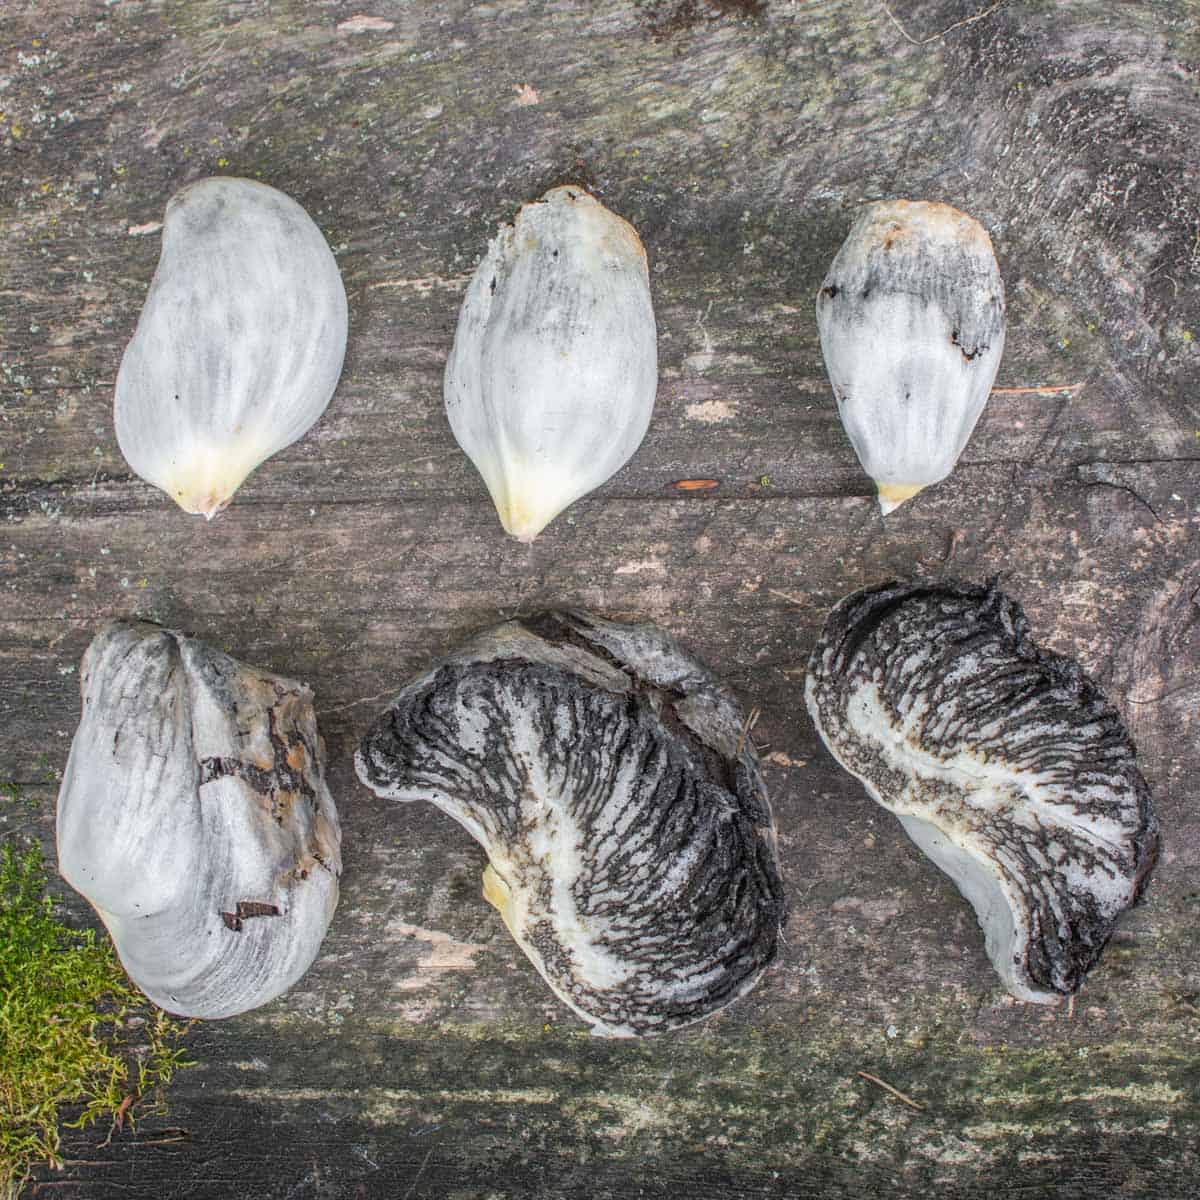 kernels of huitlacoche or corn mushrooms cut in half showing black interior. 